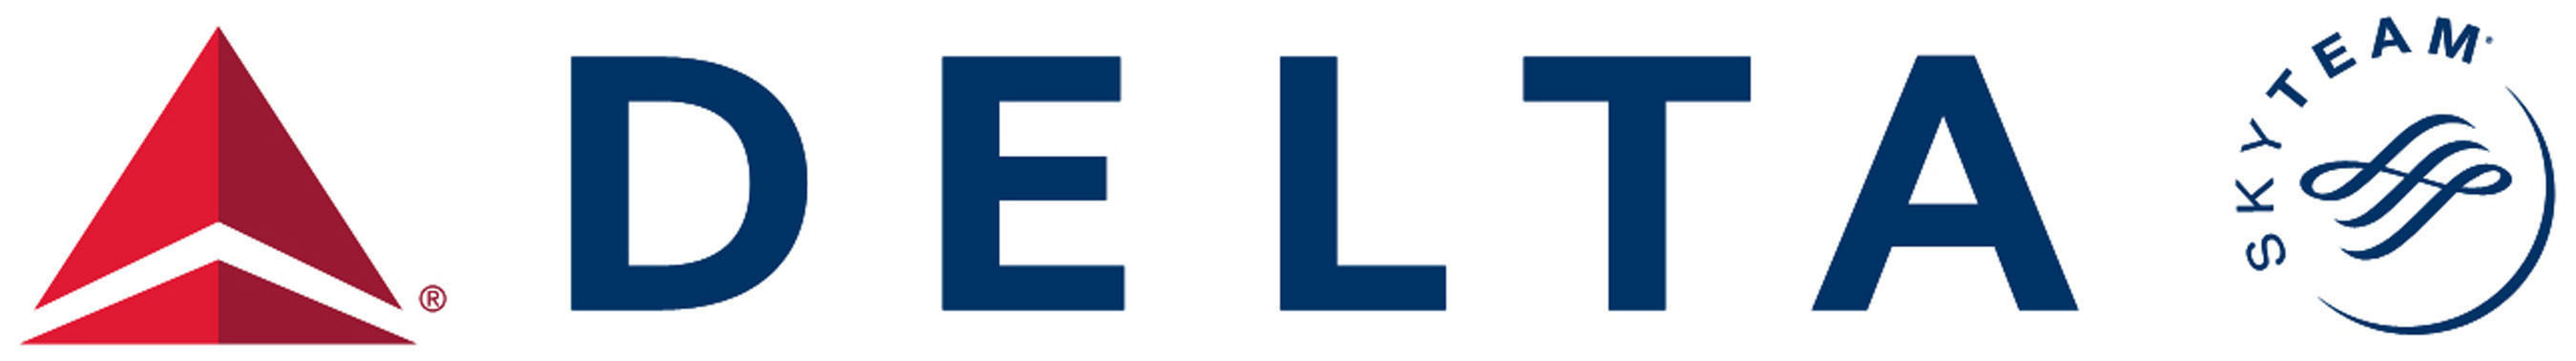 Delta SkyTeam logo.